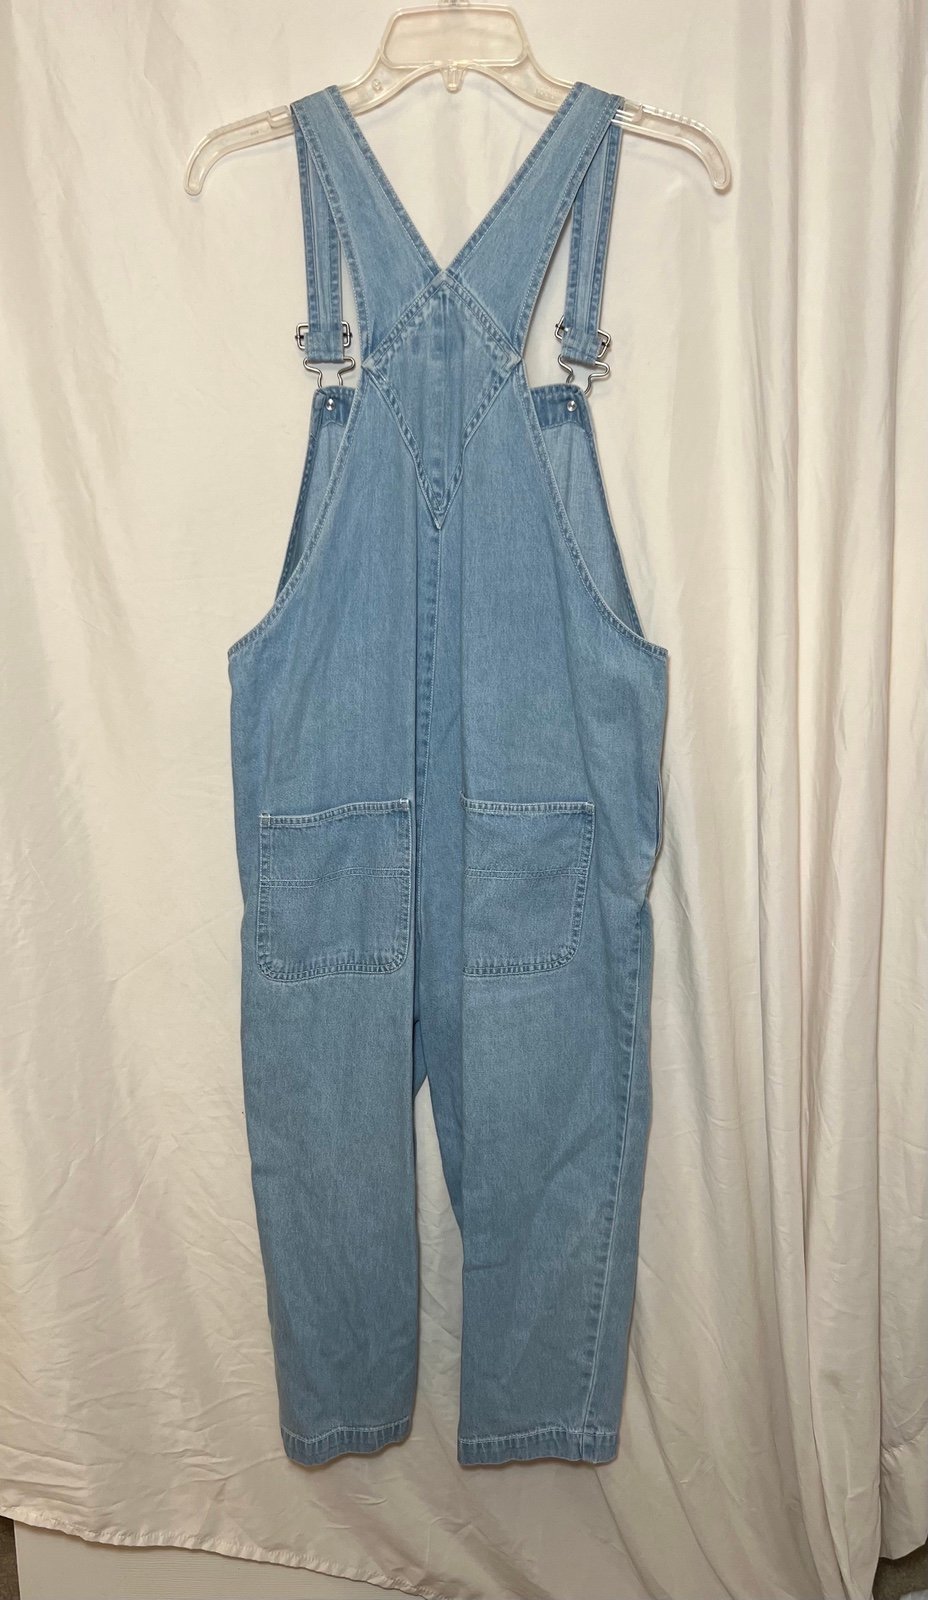 Vintage Denim Overalls - From the 90’s - EUC - 100% Cotton - Small 6yRajXs8G